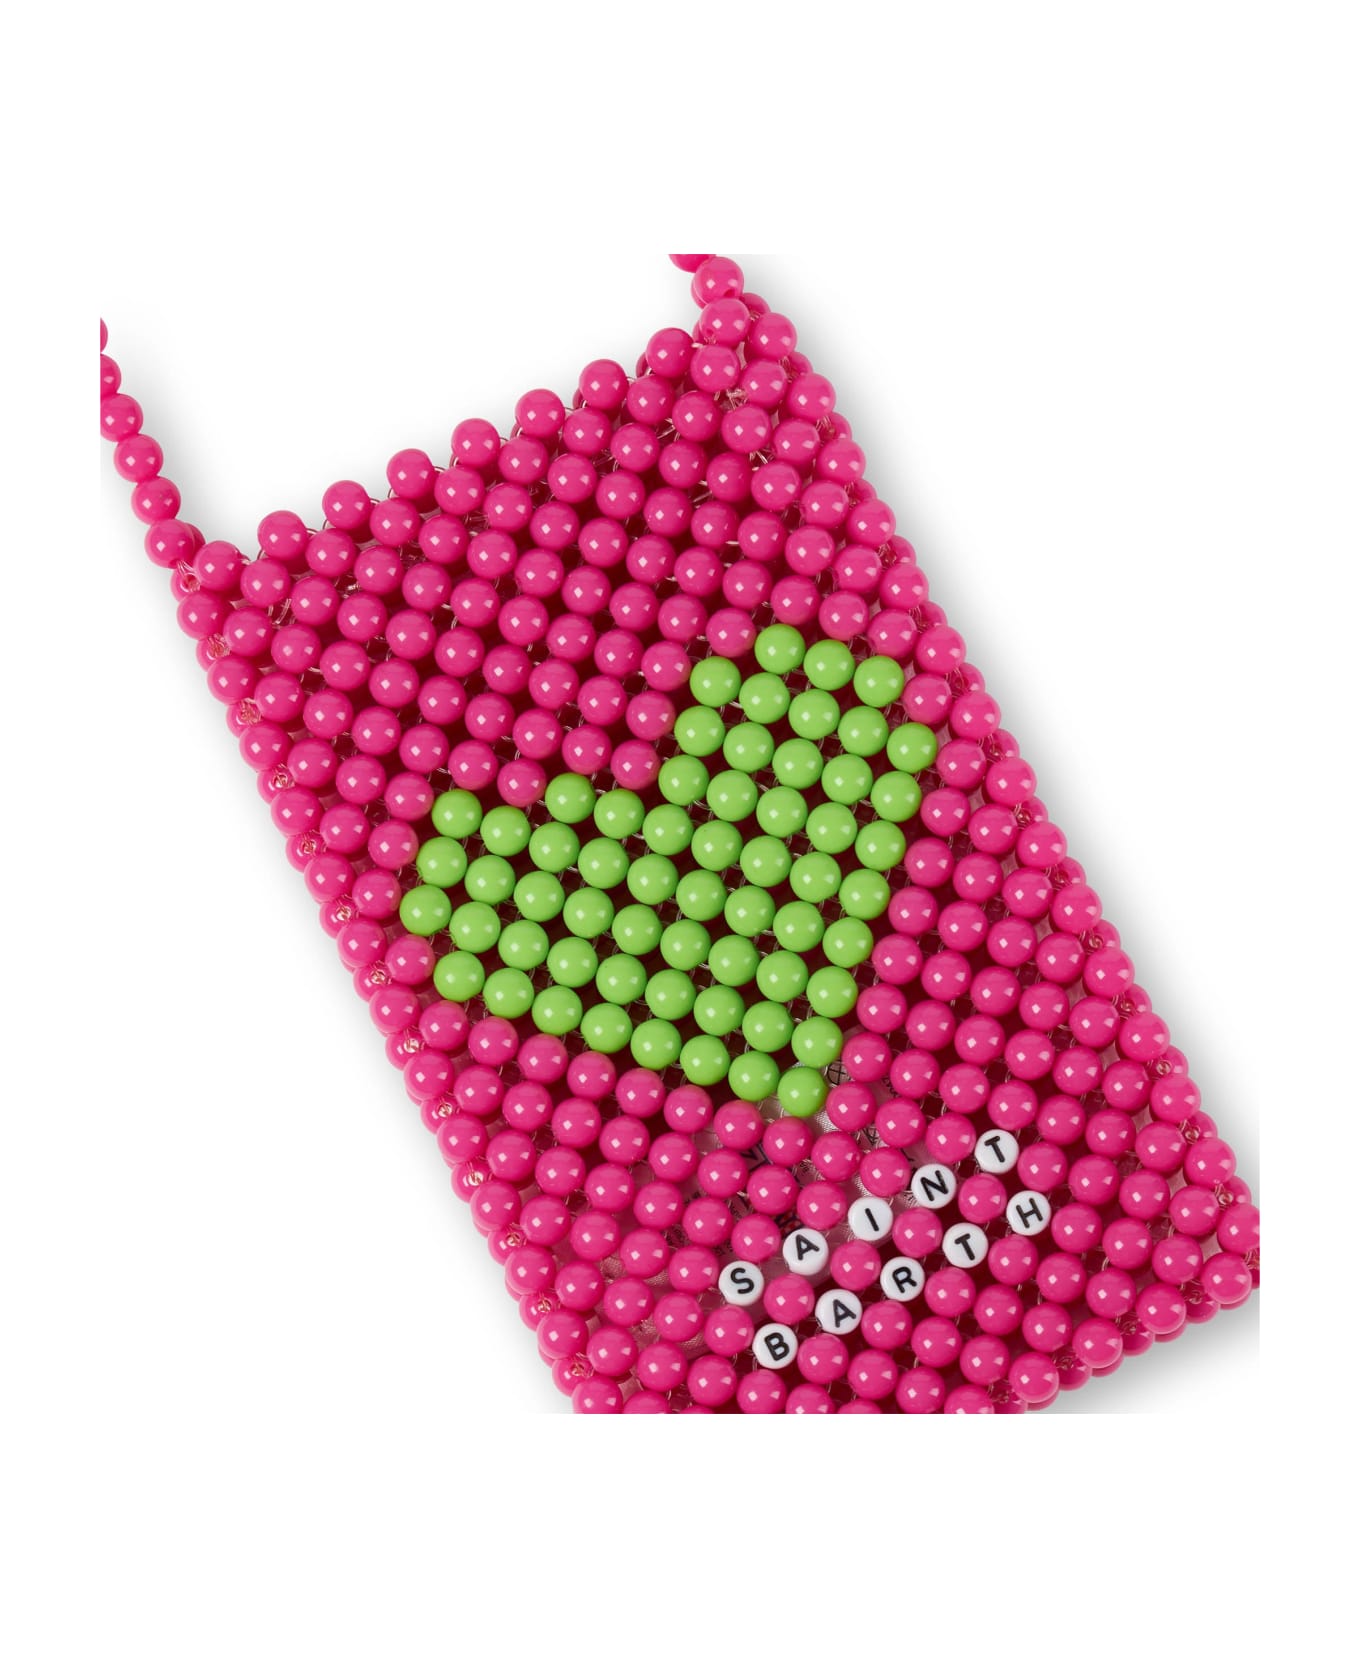 MC2 Saint Barth Pink Beaded Phone Holder With Green Heart - PINK